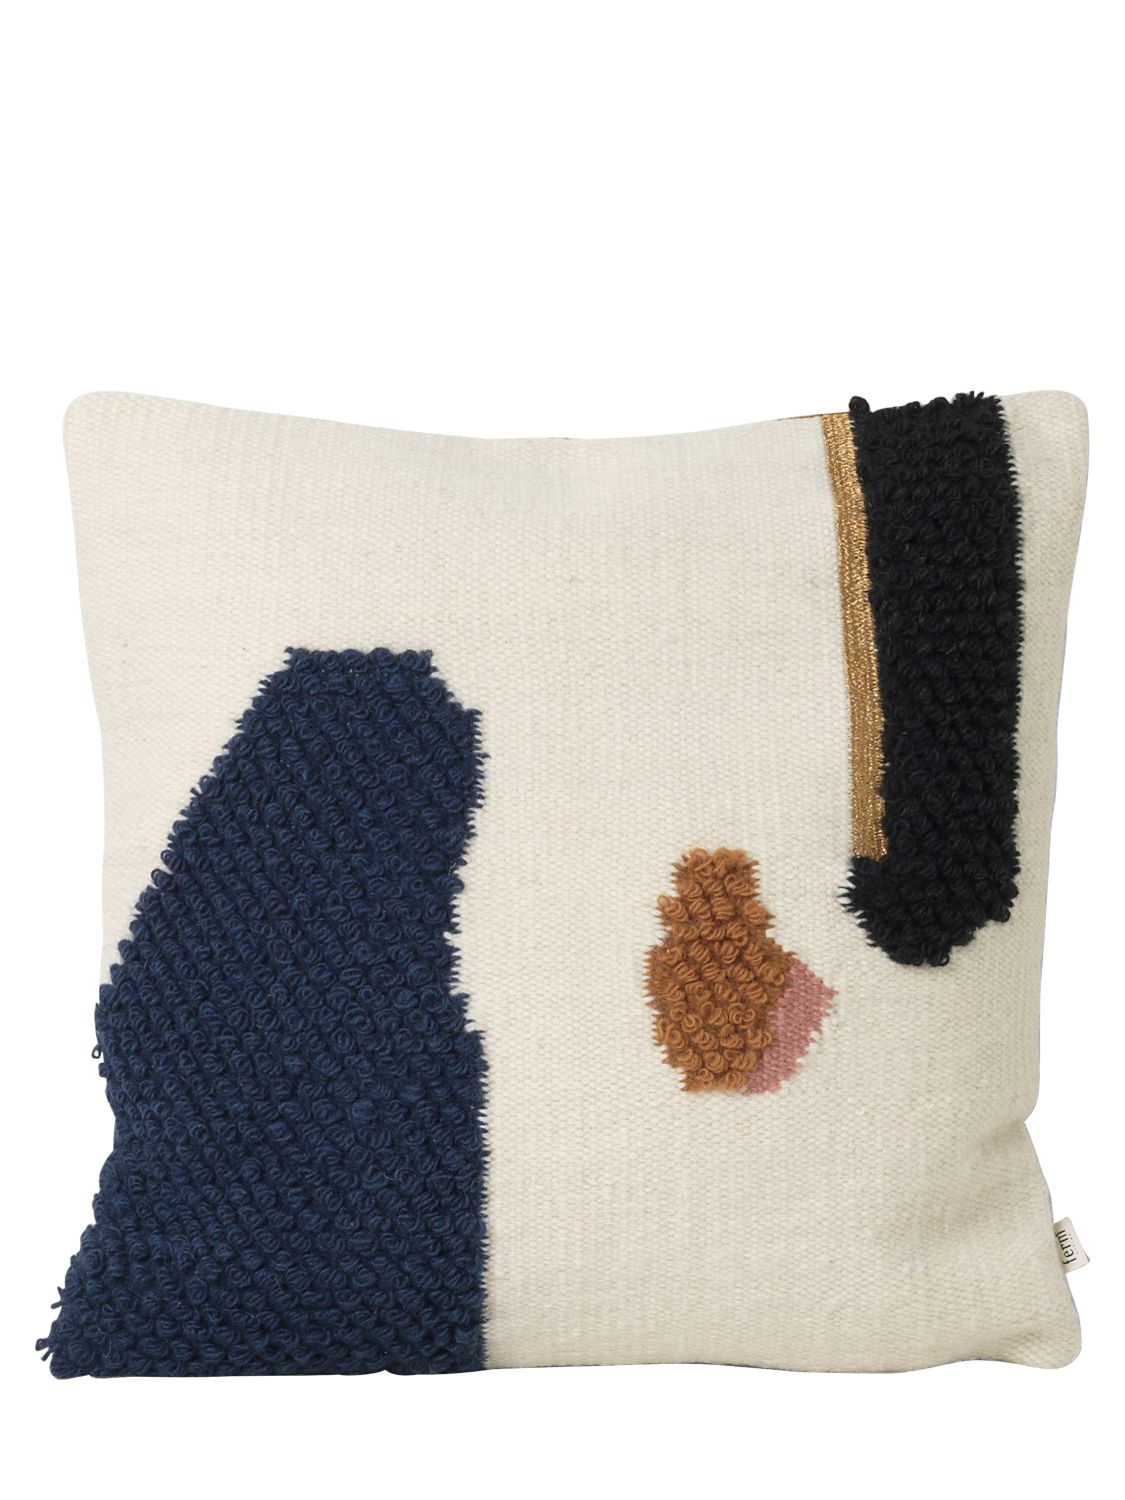 Image of Mount Wool & Cotton Cushion